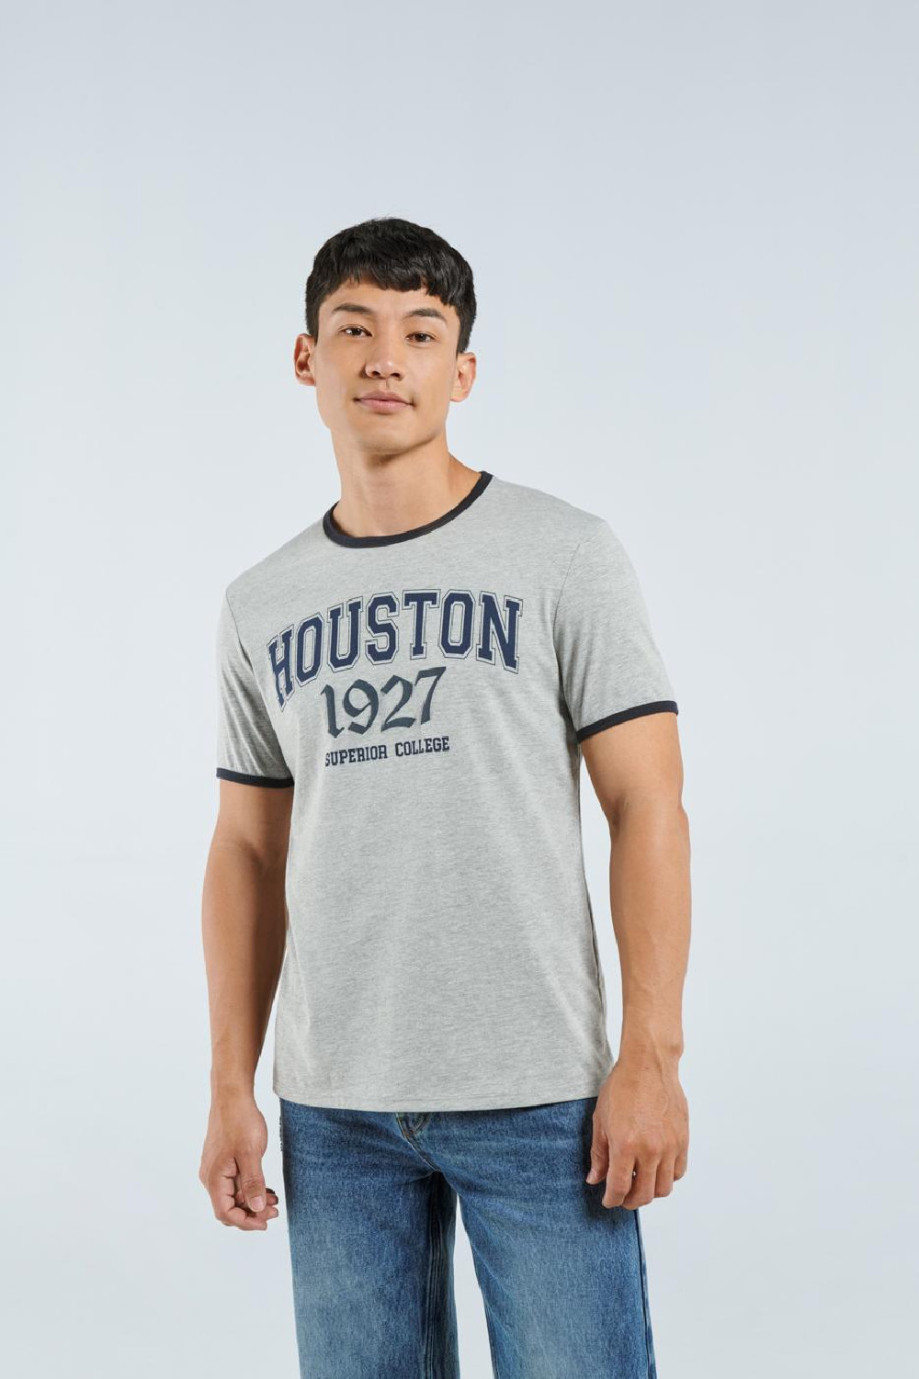 Camiseta gris con manga corta y diseño college de Houston